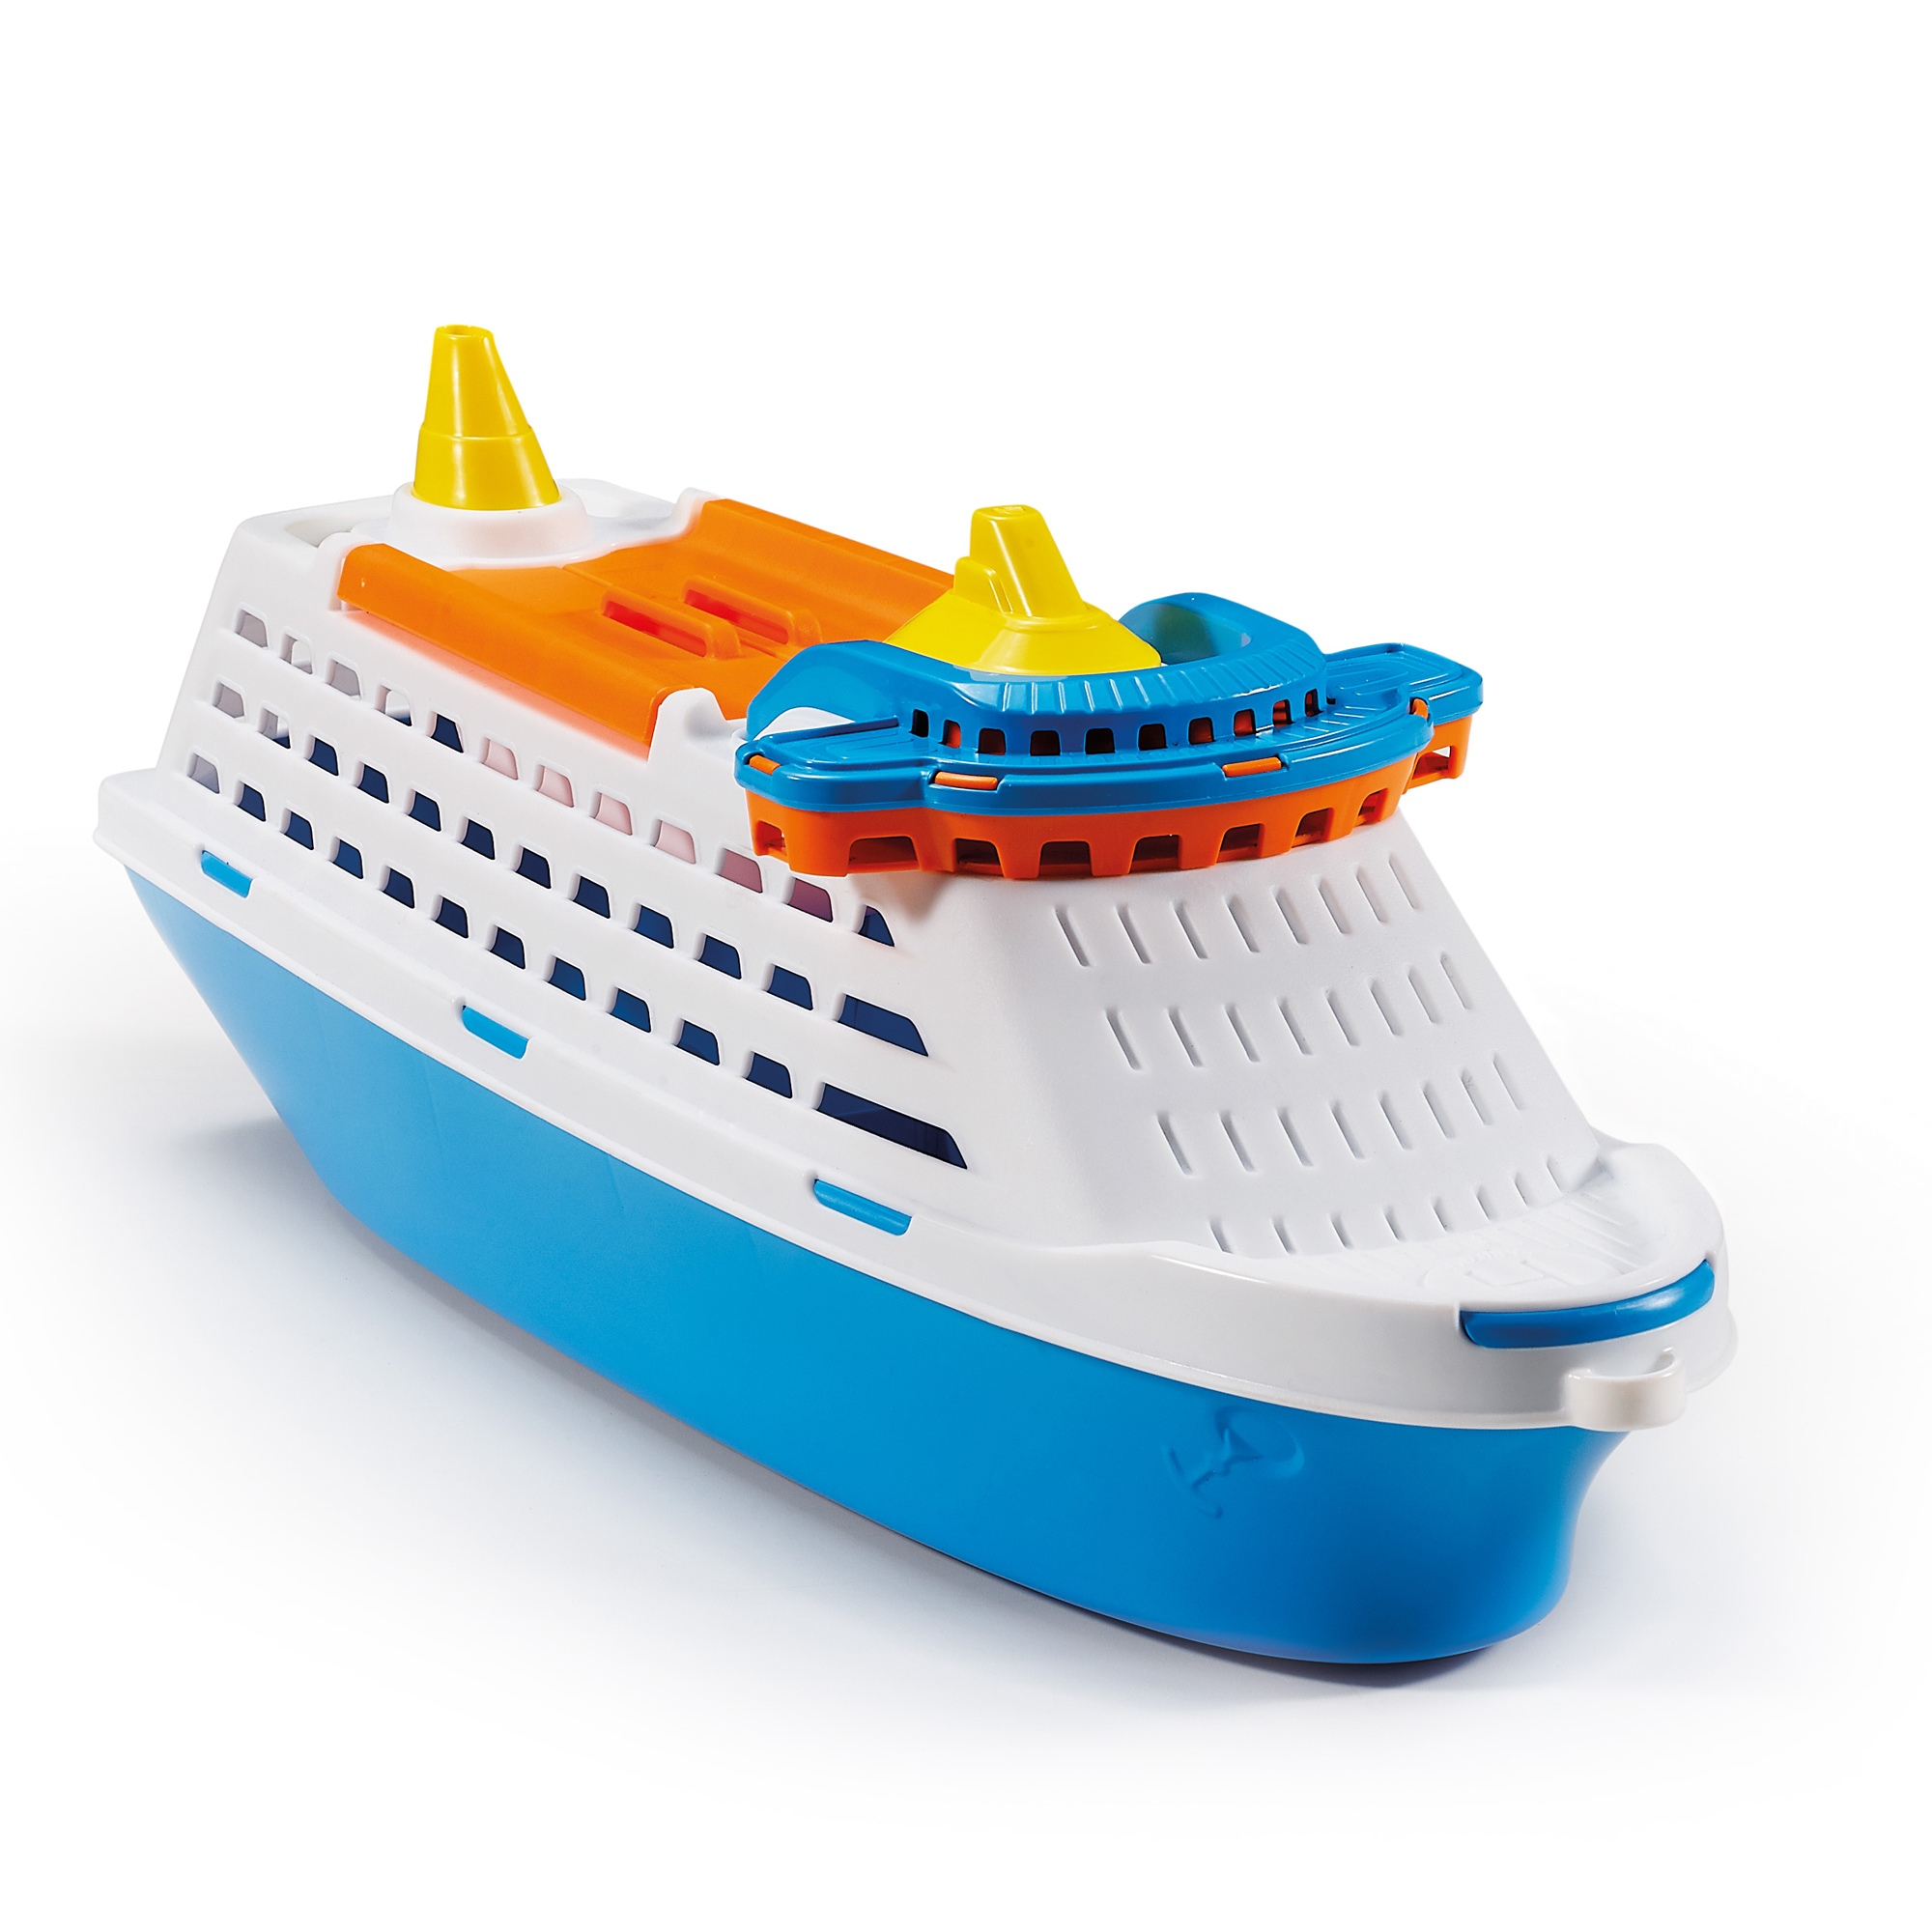 cruise ship bath toy